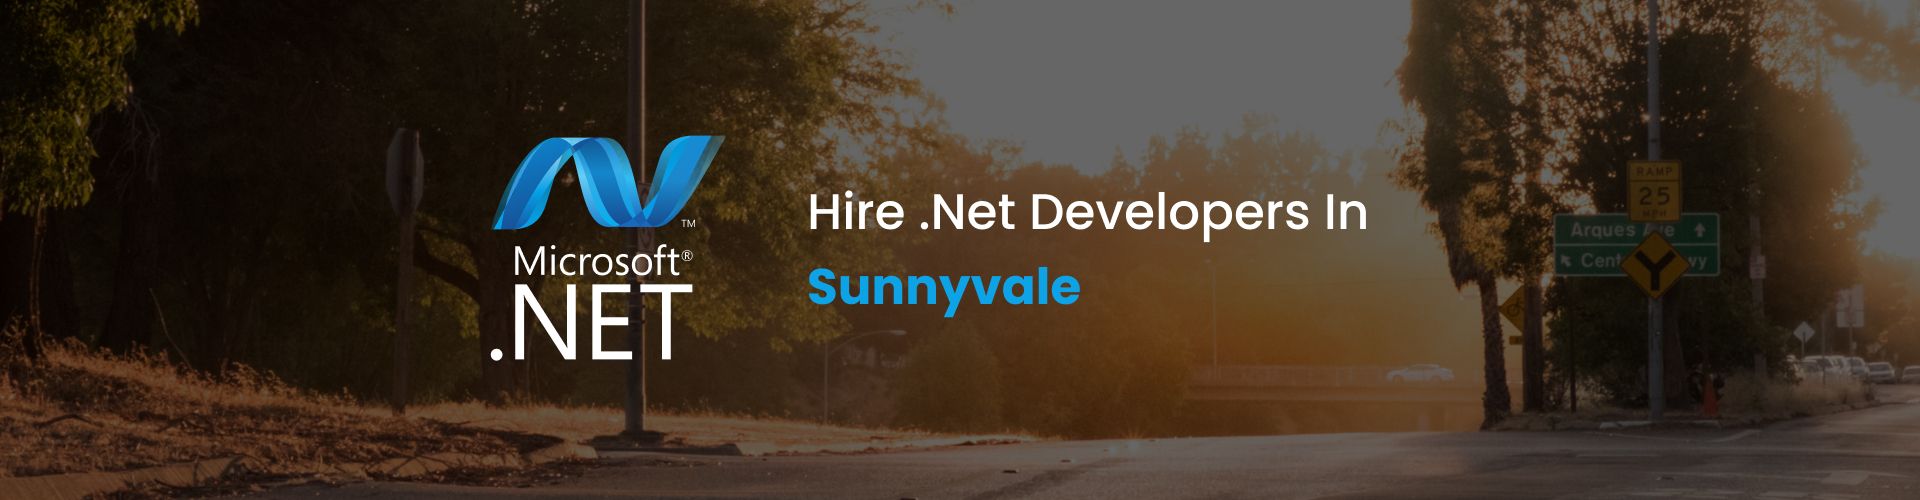 hire dot net developers in sunnyvale